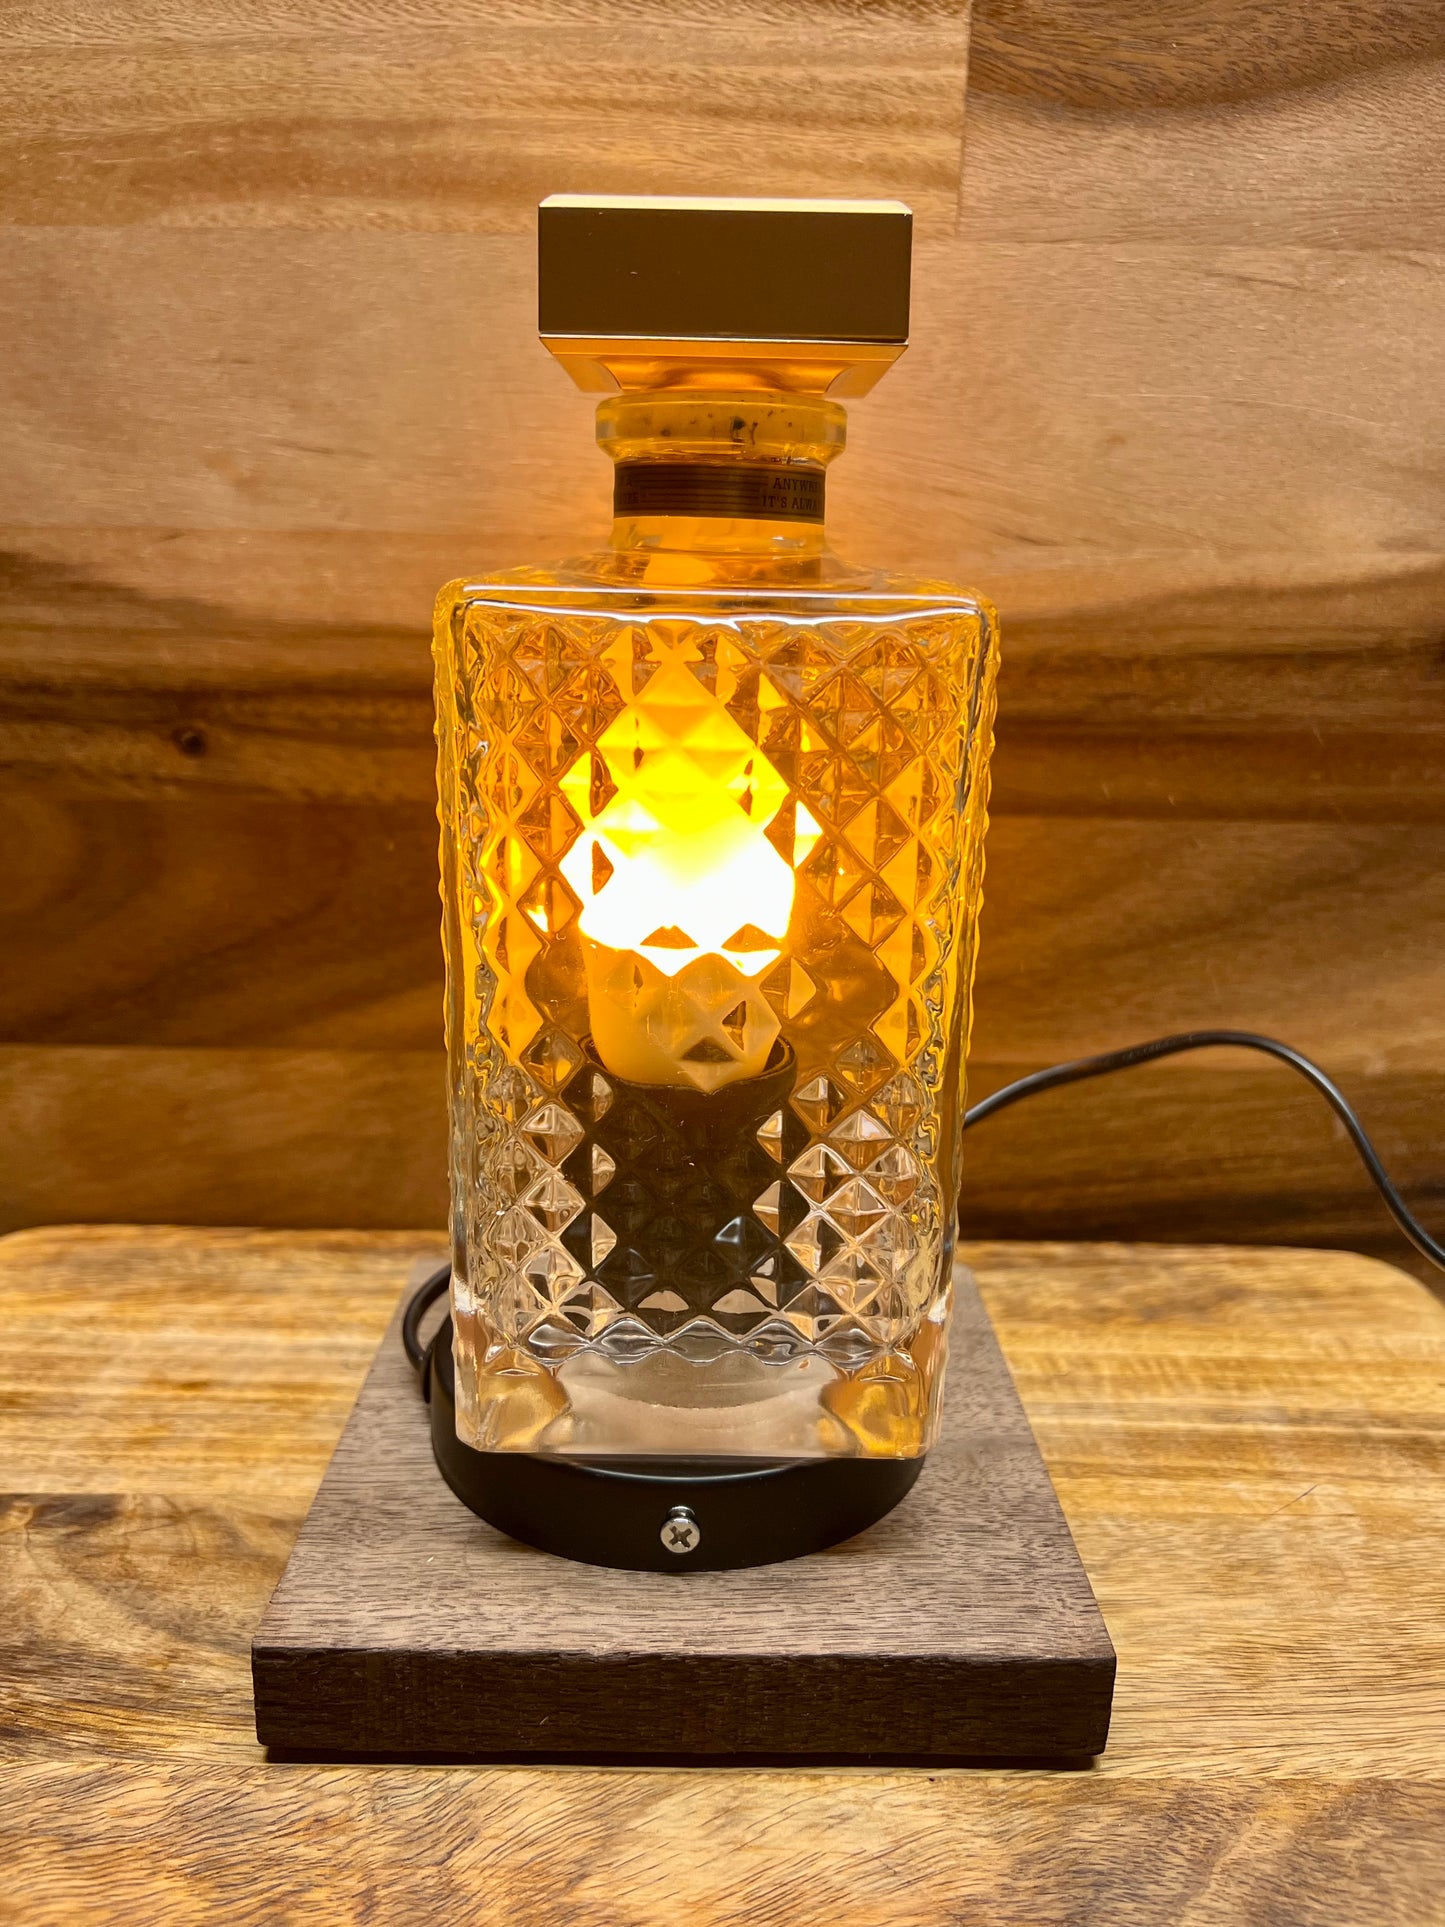 I.W. Harper Bottle Lamp